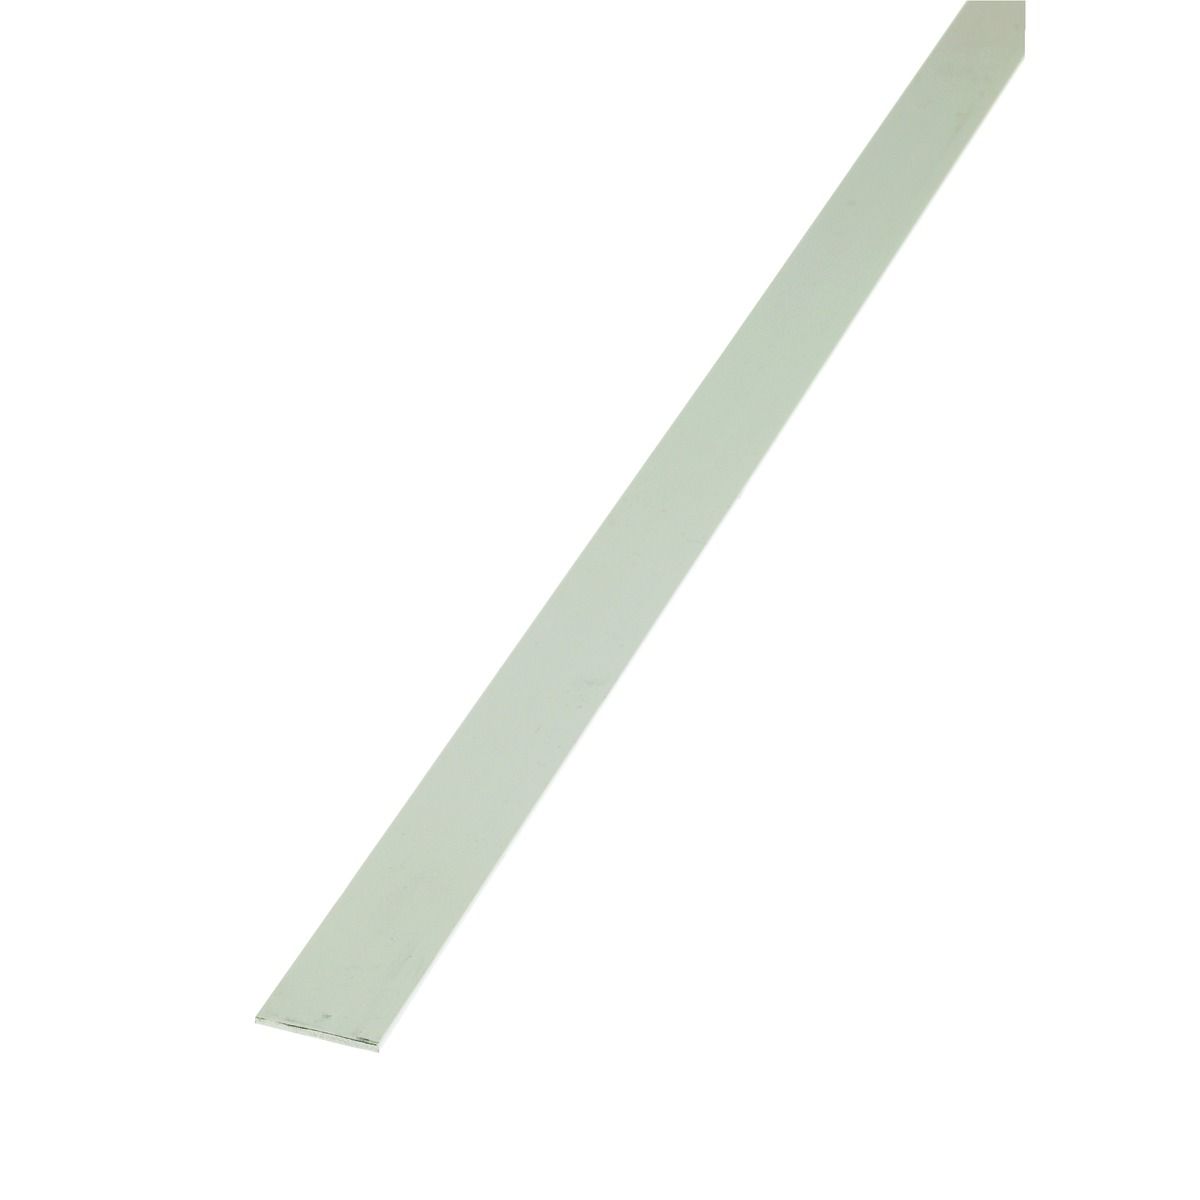 Image of Wickes 15.5mm Multi-Purpose Flat Bar - White PVCu 1m